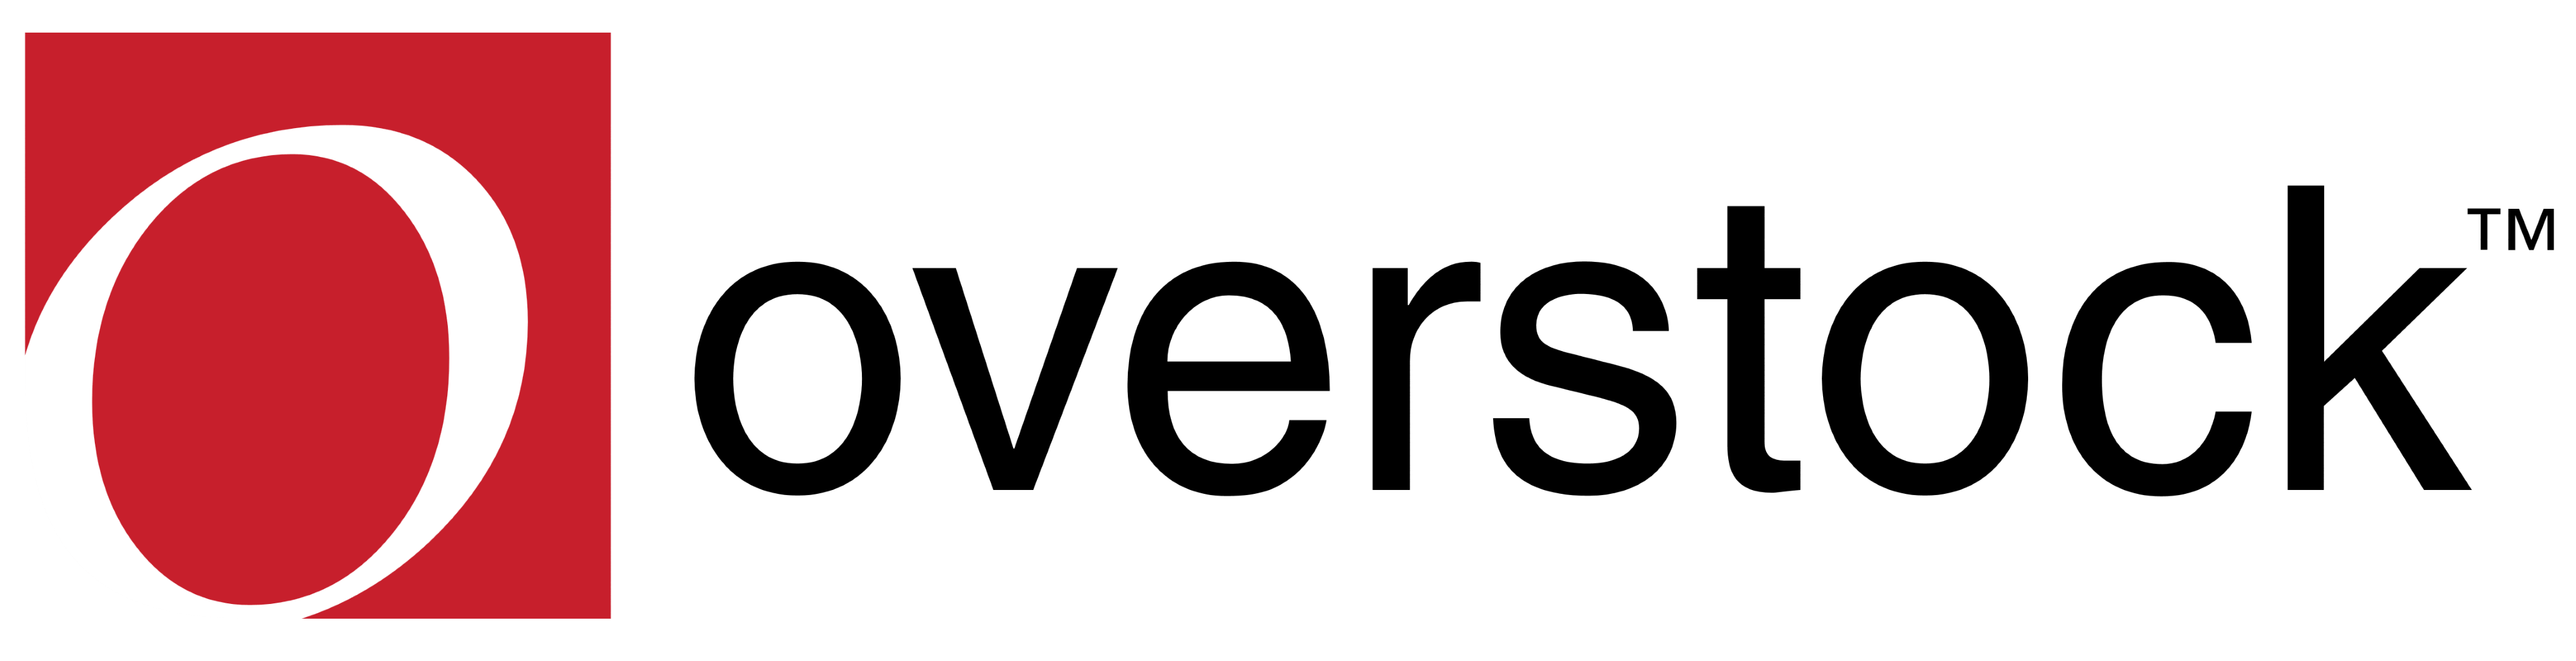 Overstock logo, logotype